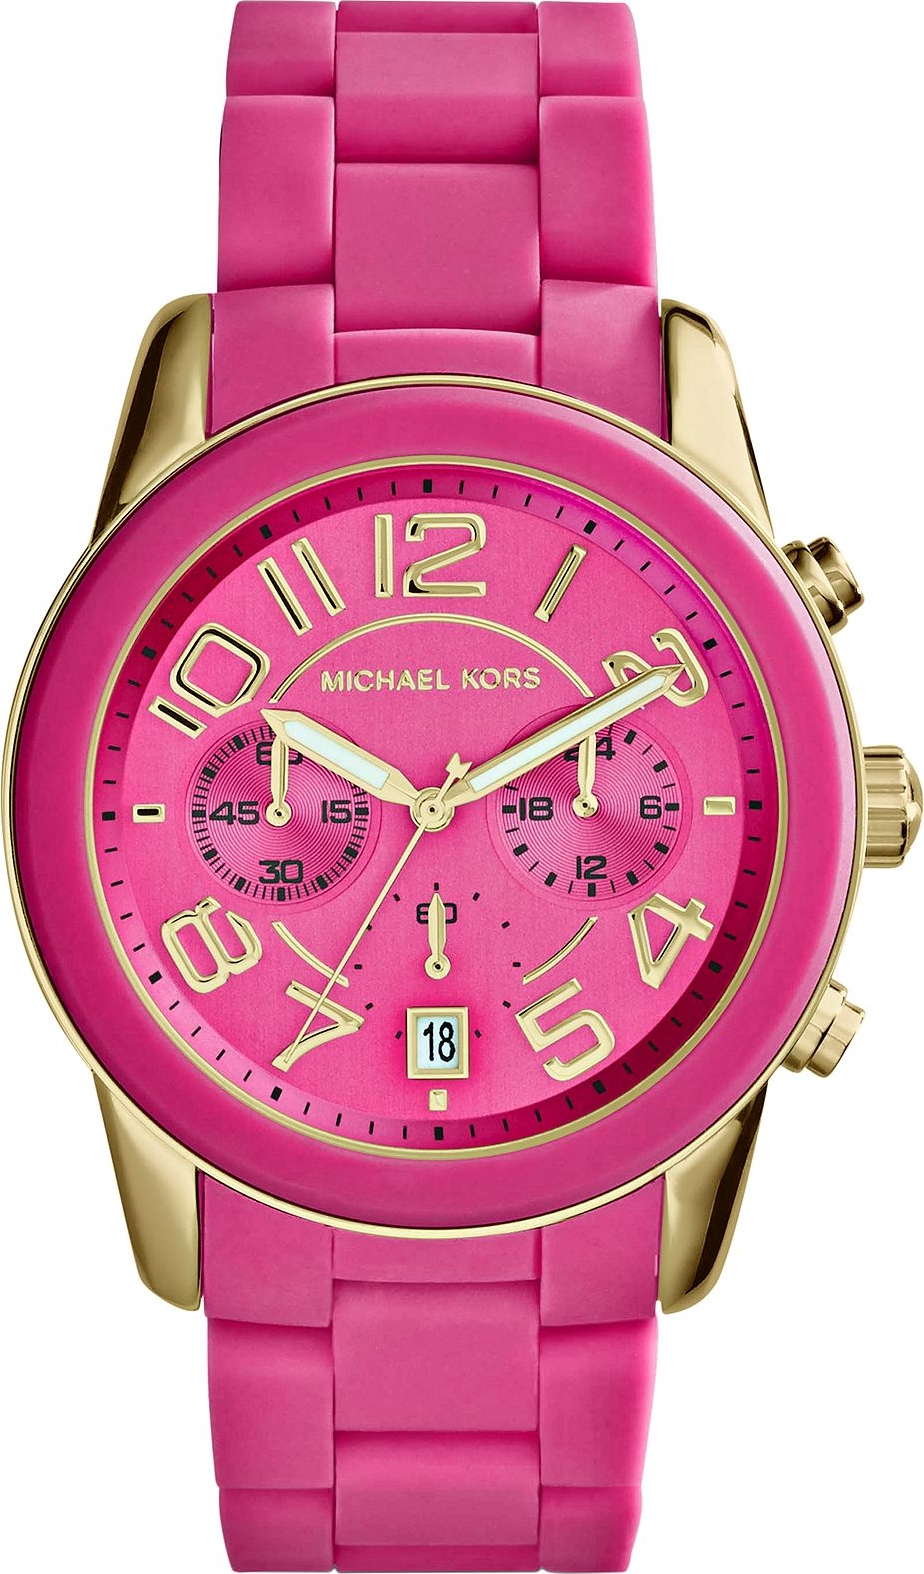 Michael Kors MK6718 Ritz Electric Pink Watch 37mm